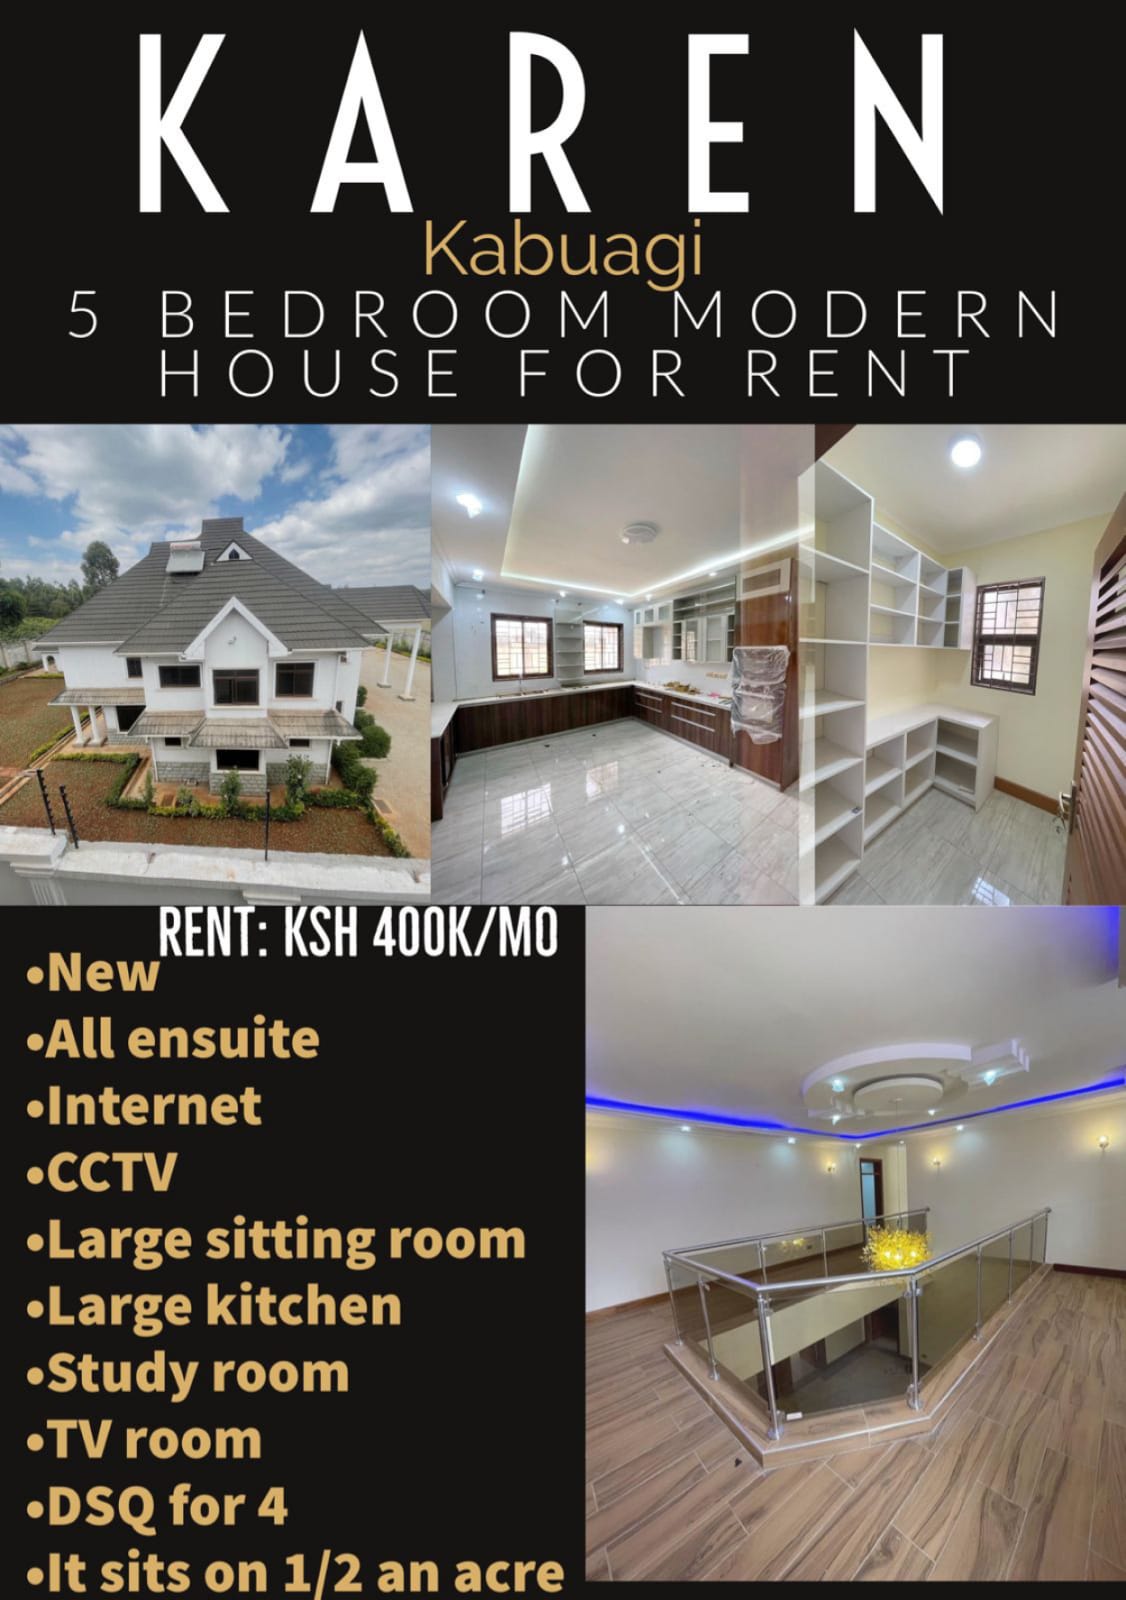 5 bedroom karen kabuagi modern new house with 4 dsq EXCLUSIVE For rent